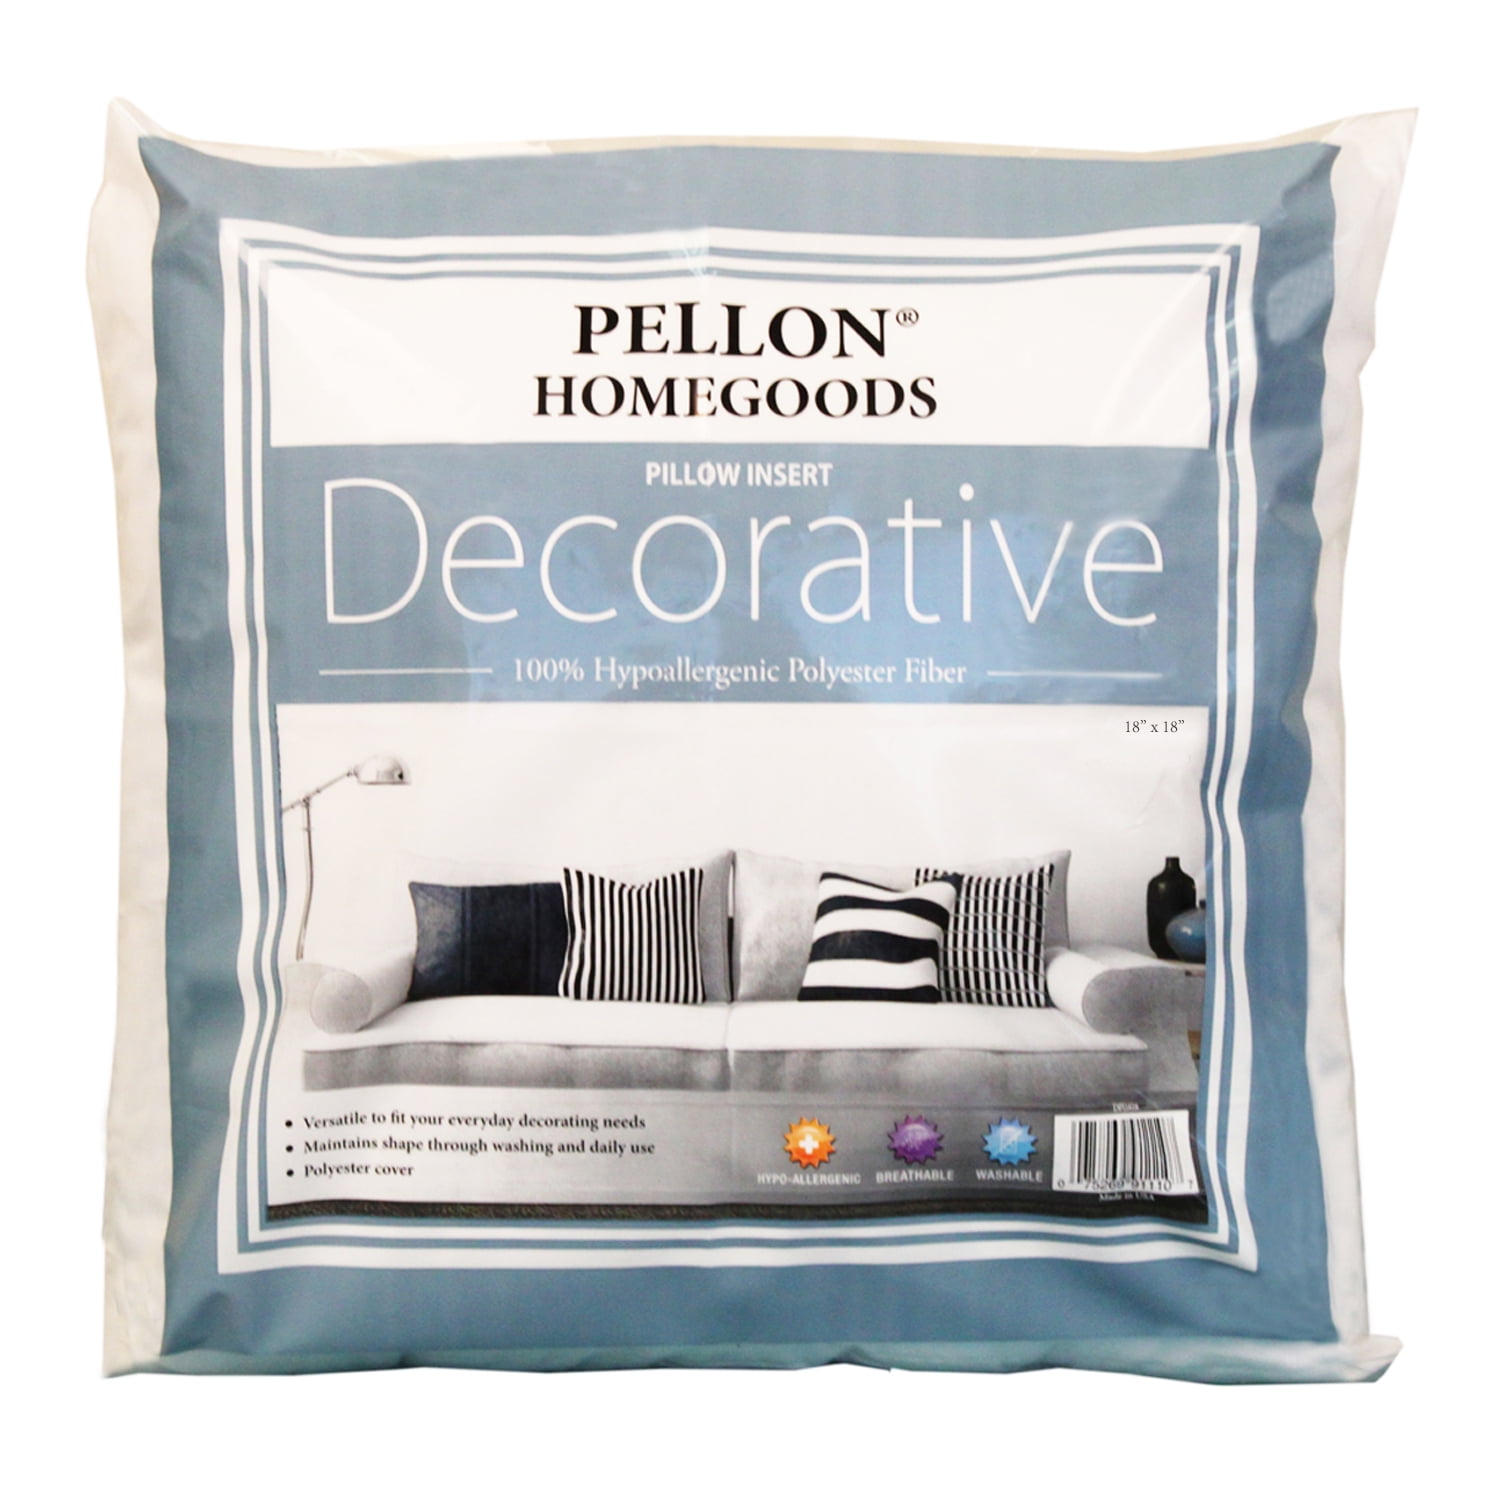 Pellon Homegoods Decorative Pillow Inserts , 18 x 18 - Set of 2